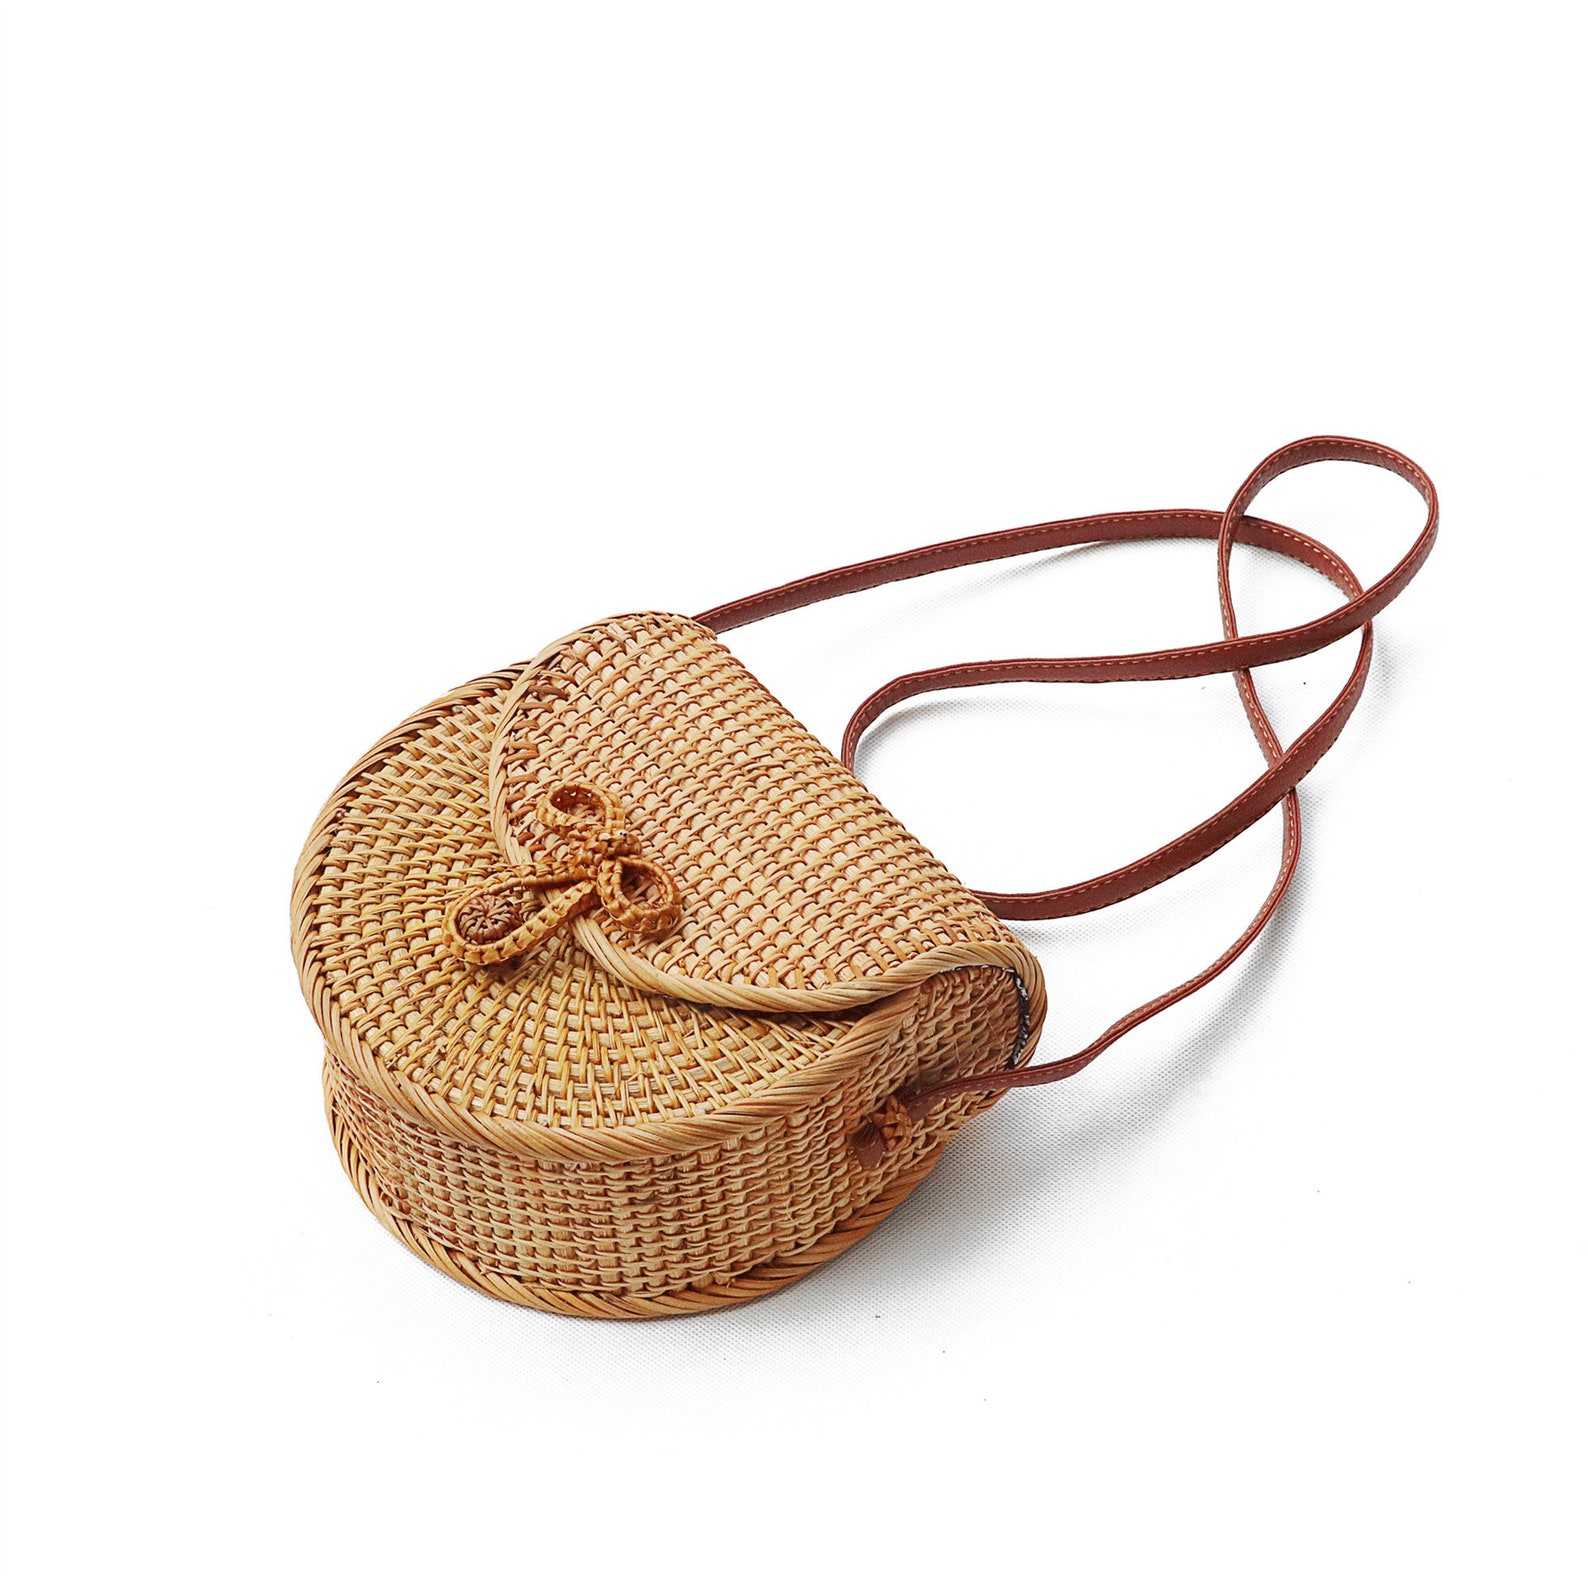 Rattan woven shoulder bag handmade square bag natural woven | Etsy